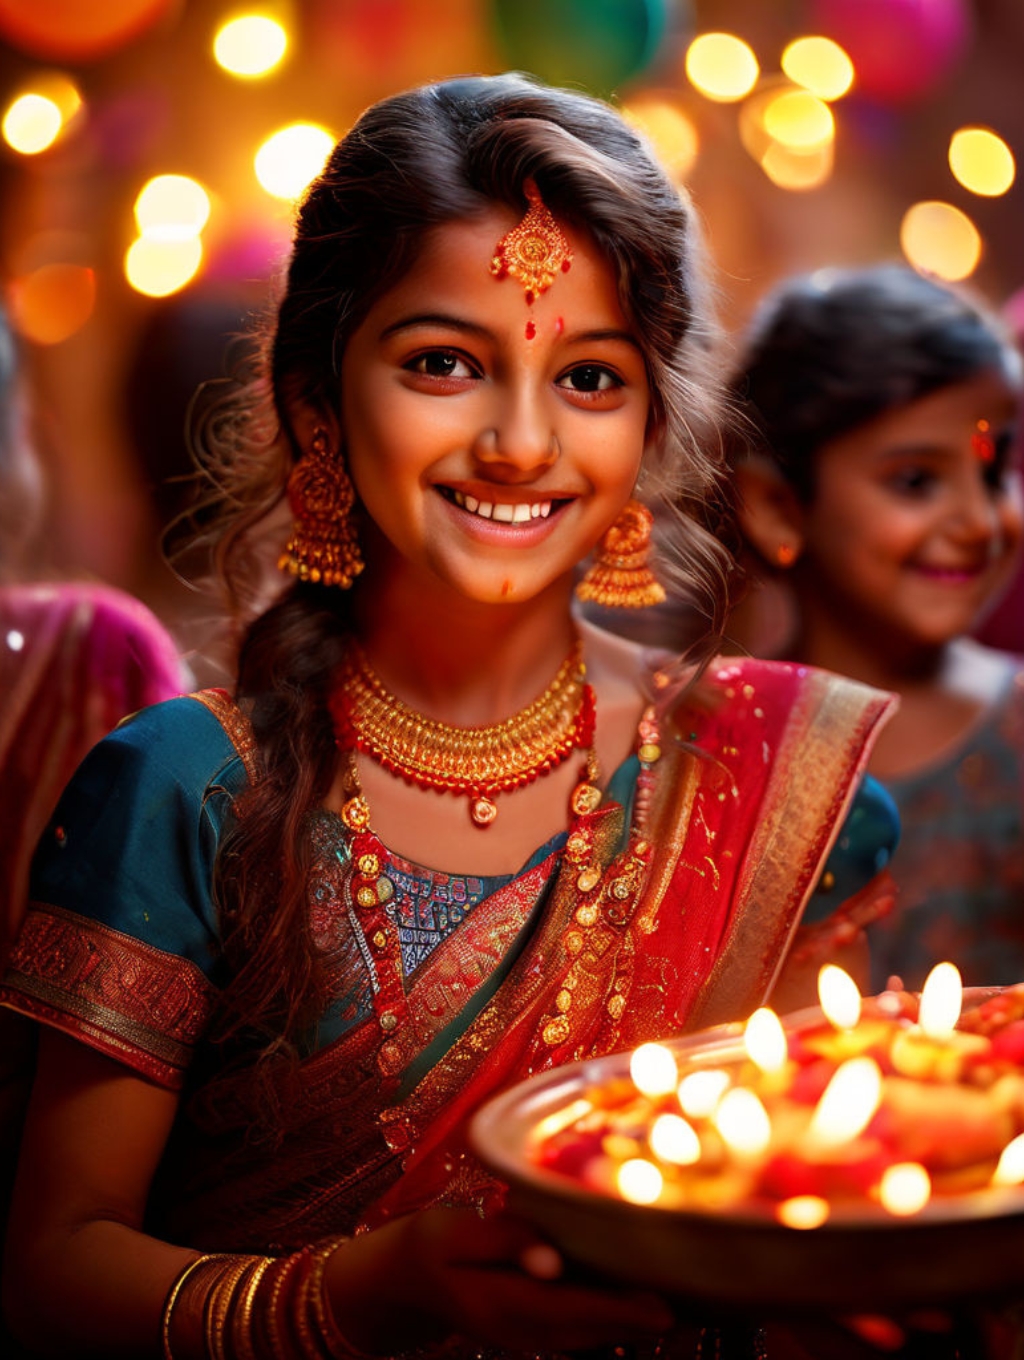 Indian Girl: Custom Frames & Portrait Photography-Theme:2